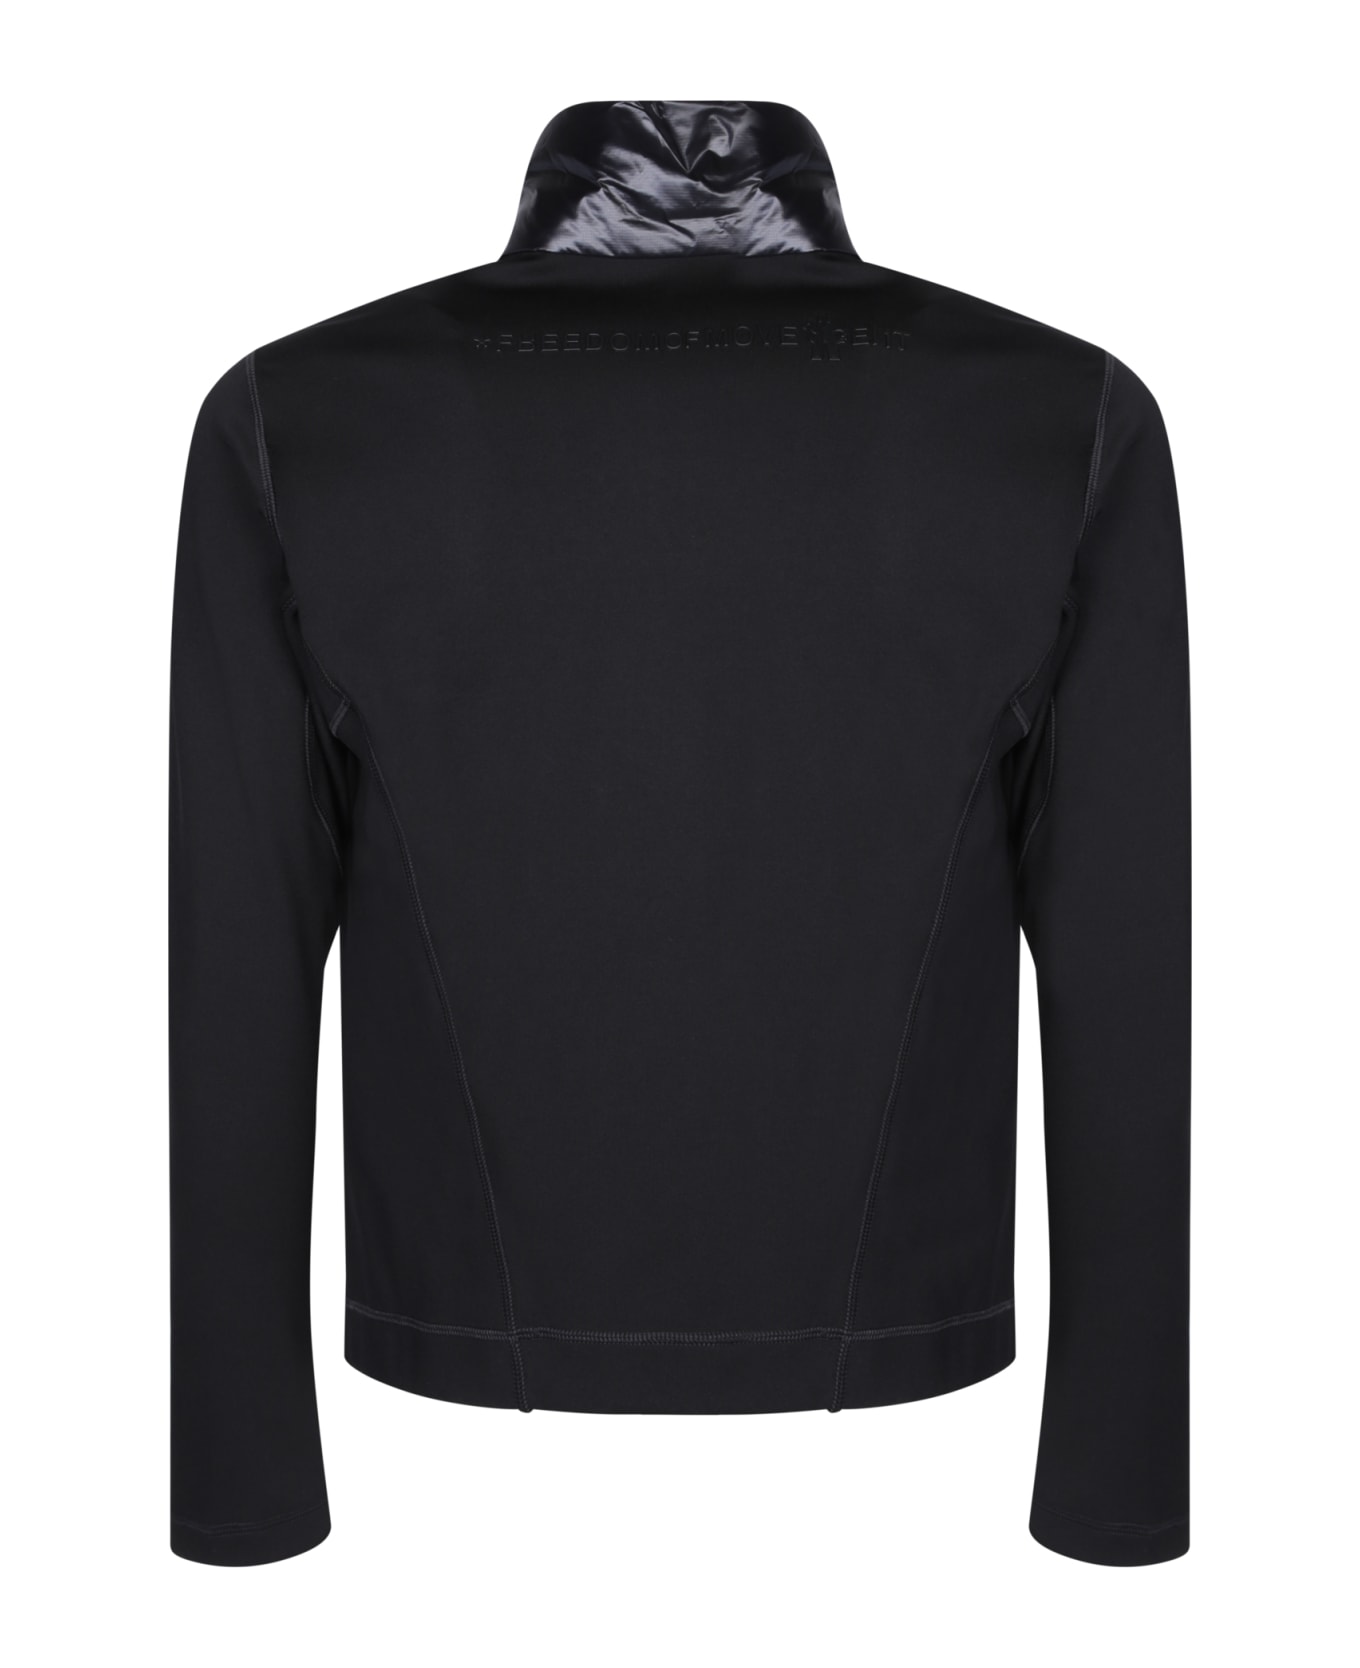 Moncler Grenoble Logo Jacket - Black